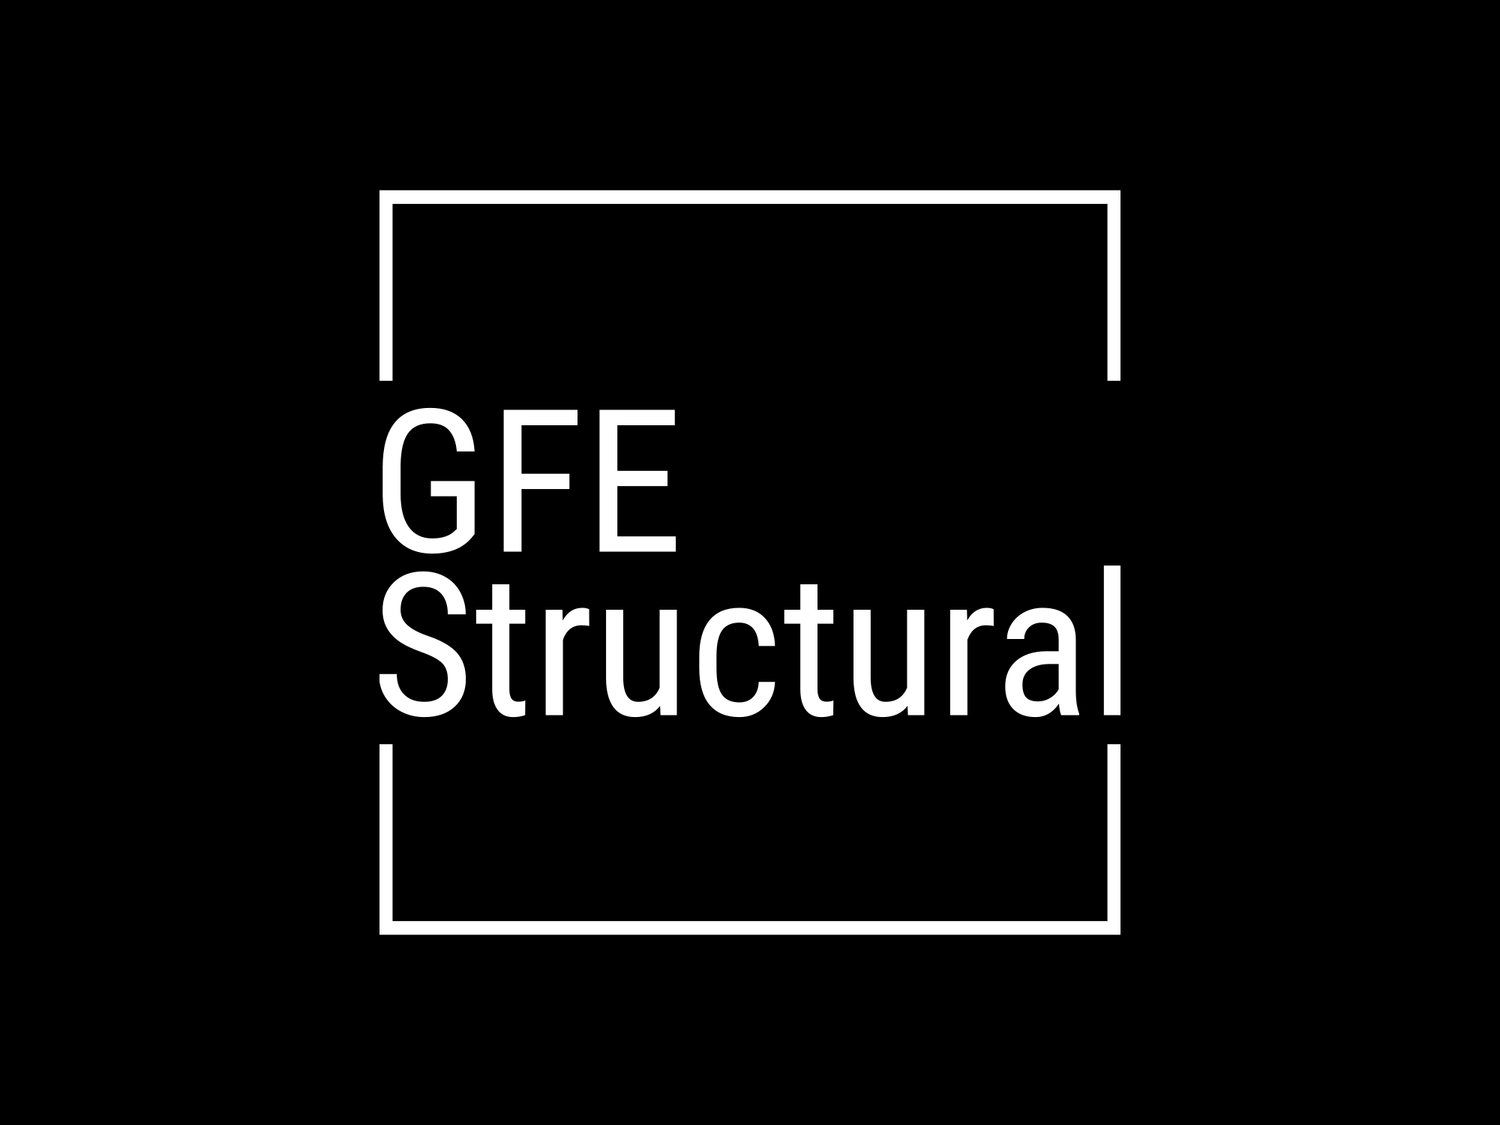 GFE Structural, Inc.